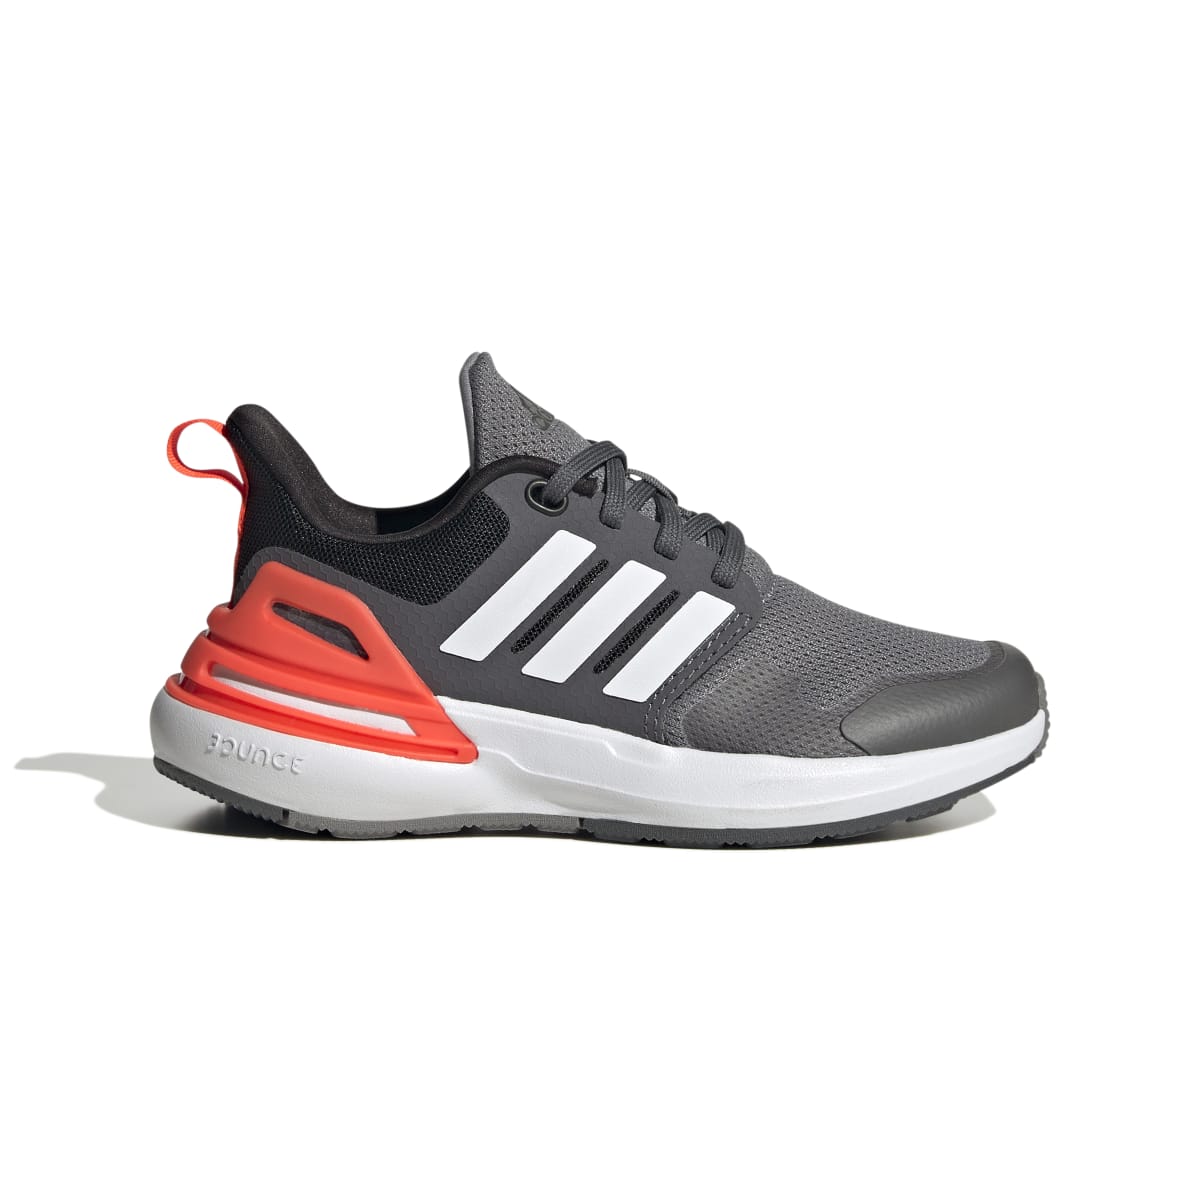 ADIDAS HP6130 RAPIDASPORT K YTH'S (Medium) Grey/White/Grey Textile Running Shoes